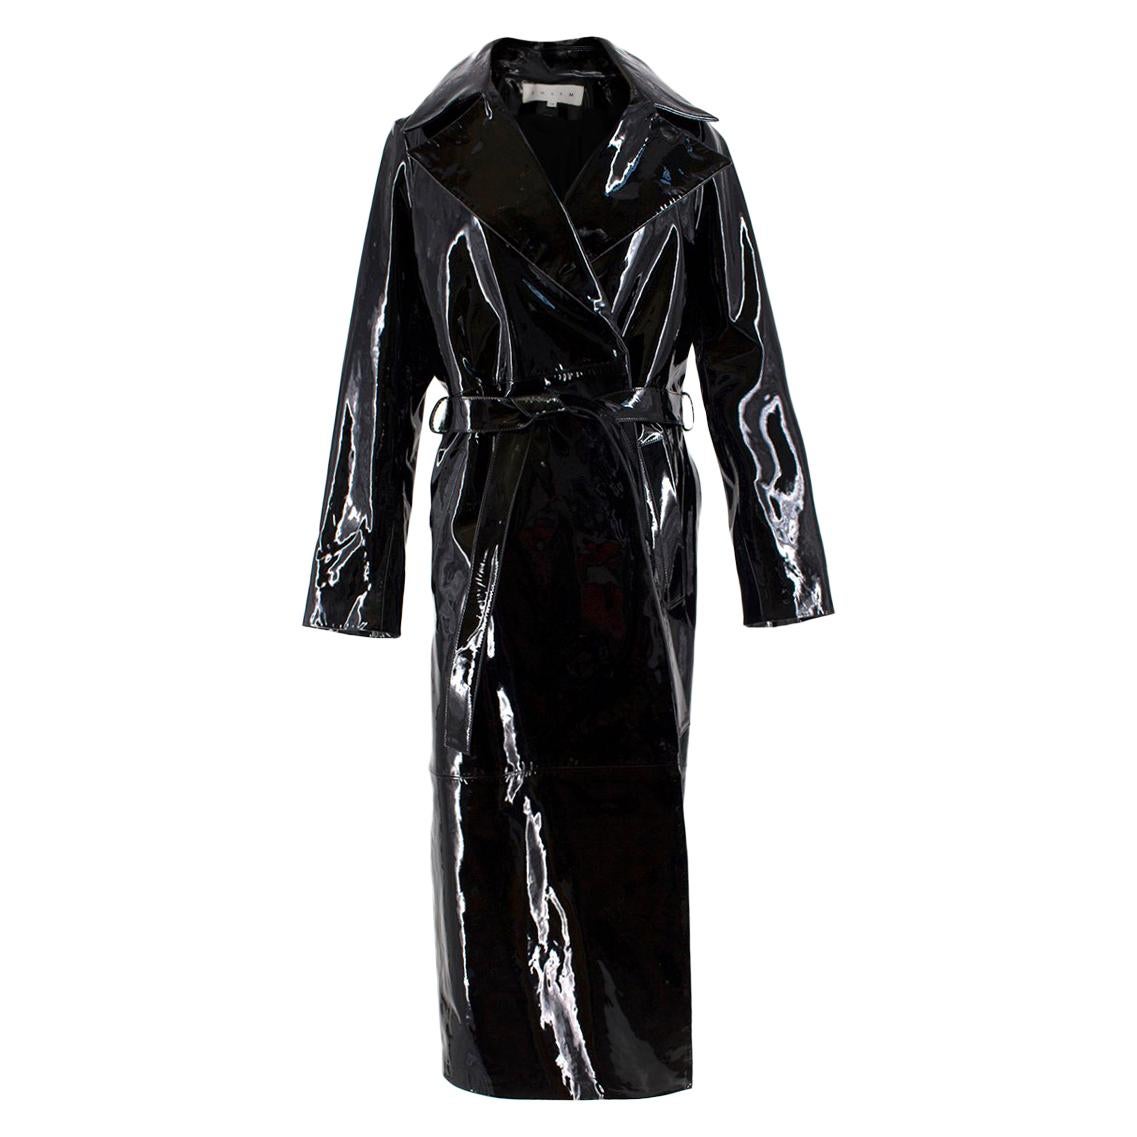 Skiim Karla Black Patent Leather Trench Coat - New Season Size 38 For Sale